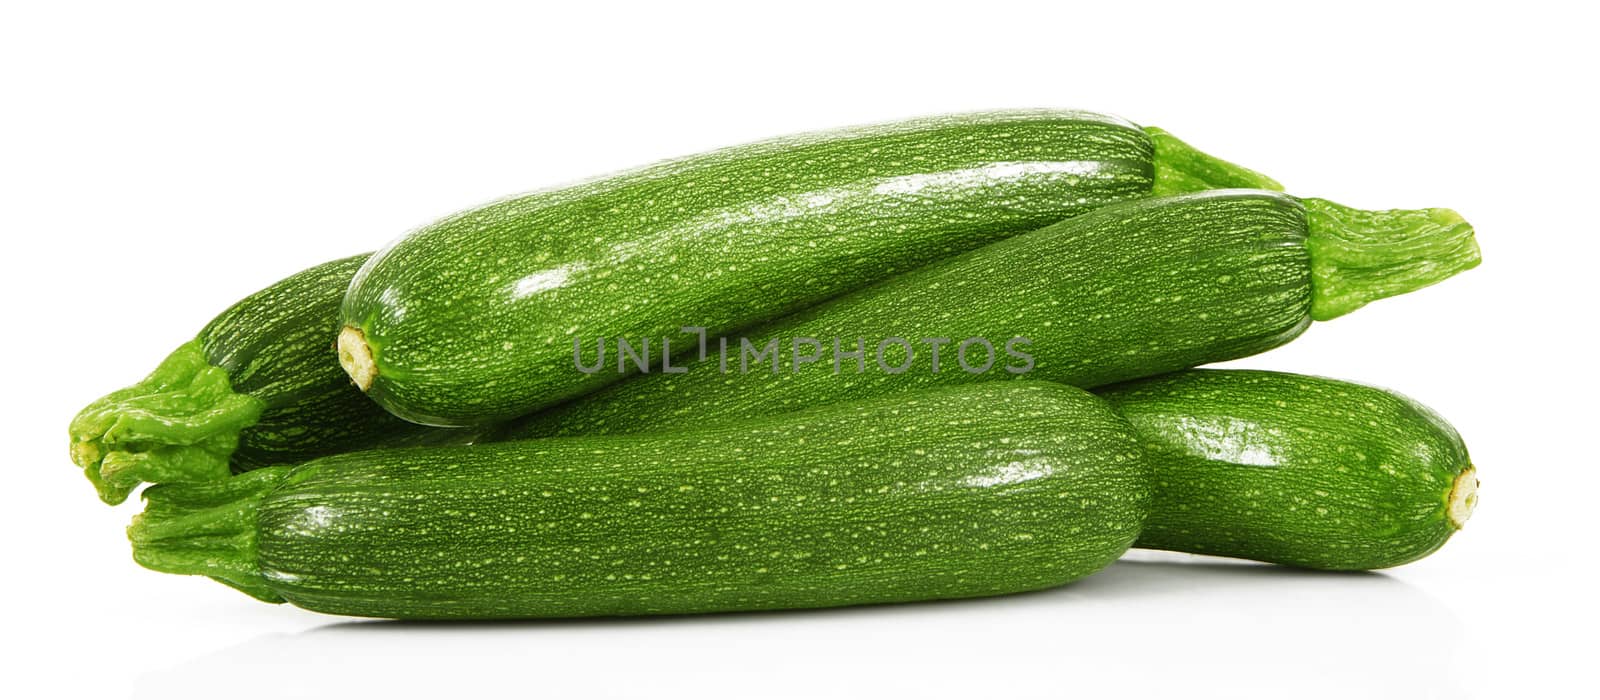 a fresh zucchini on white background